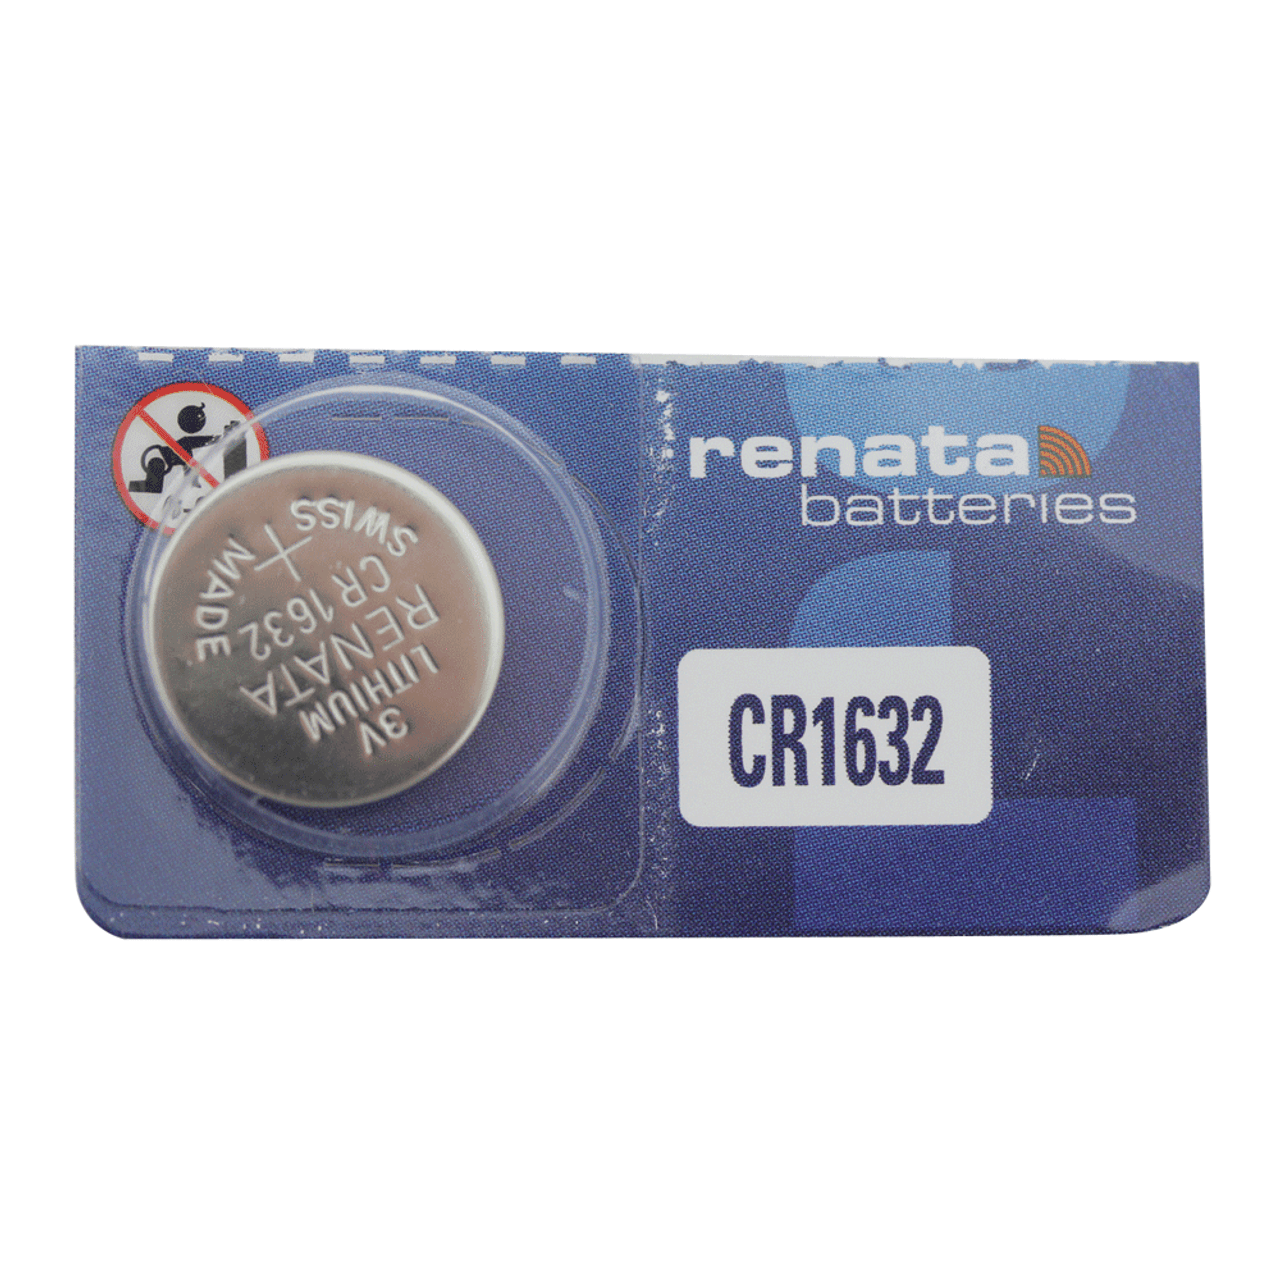 Renata Remote Battery CR1632 For Remotes & Smart Keys